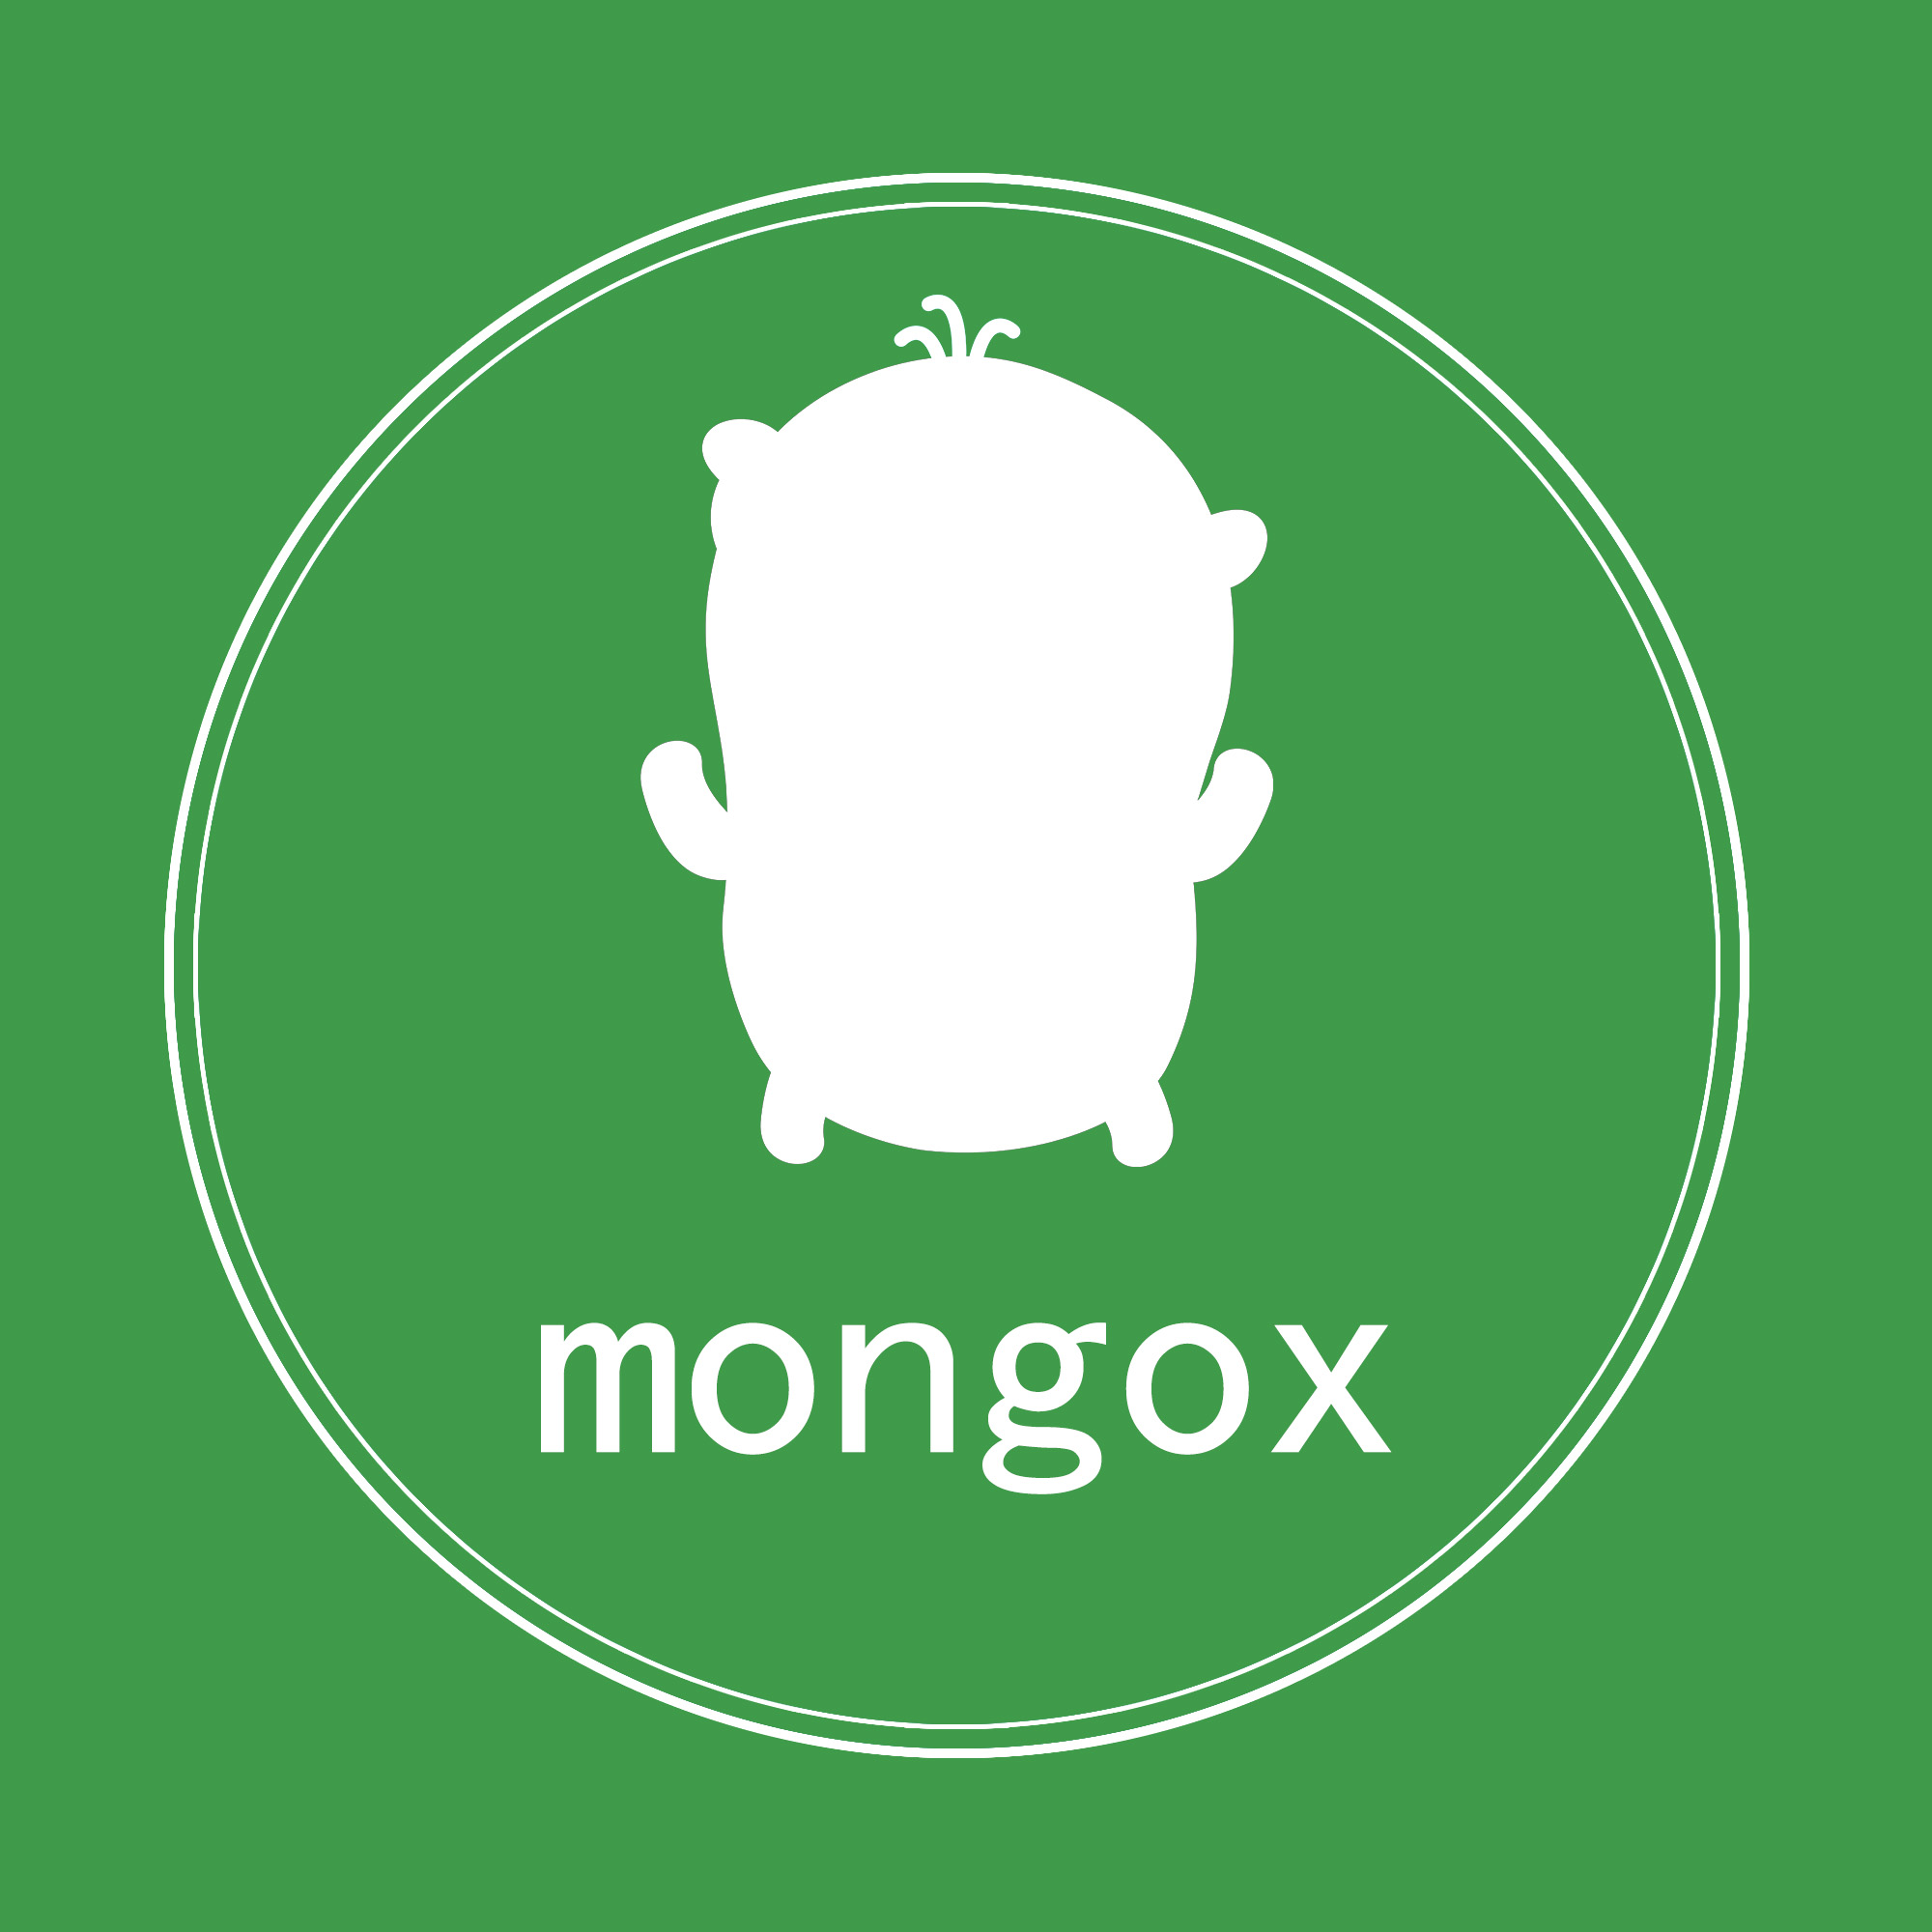 go-mongox：是一个基于泛型的库，对 MongoDB 的官方框架进行了扩展